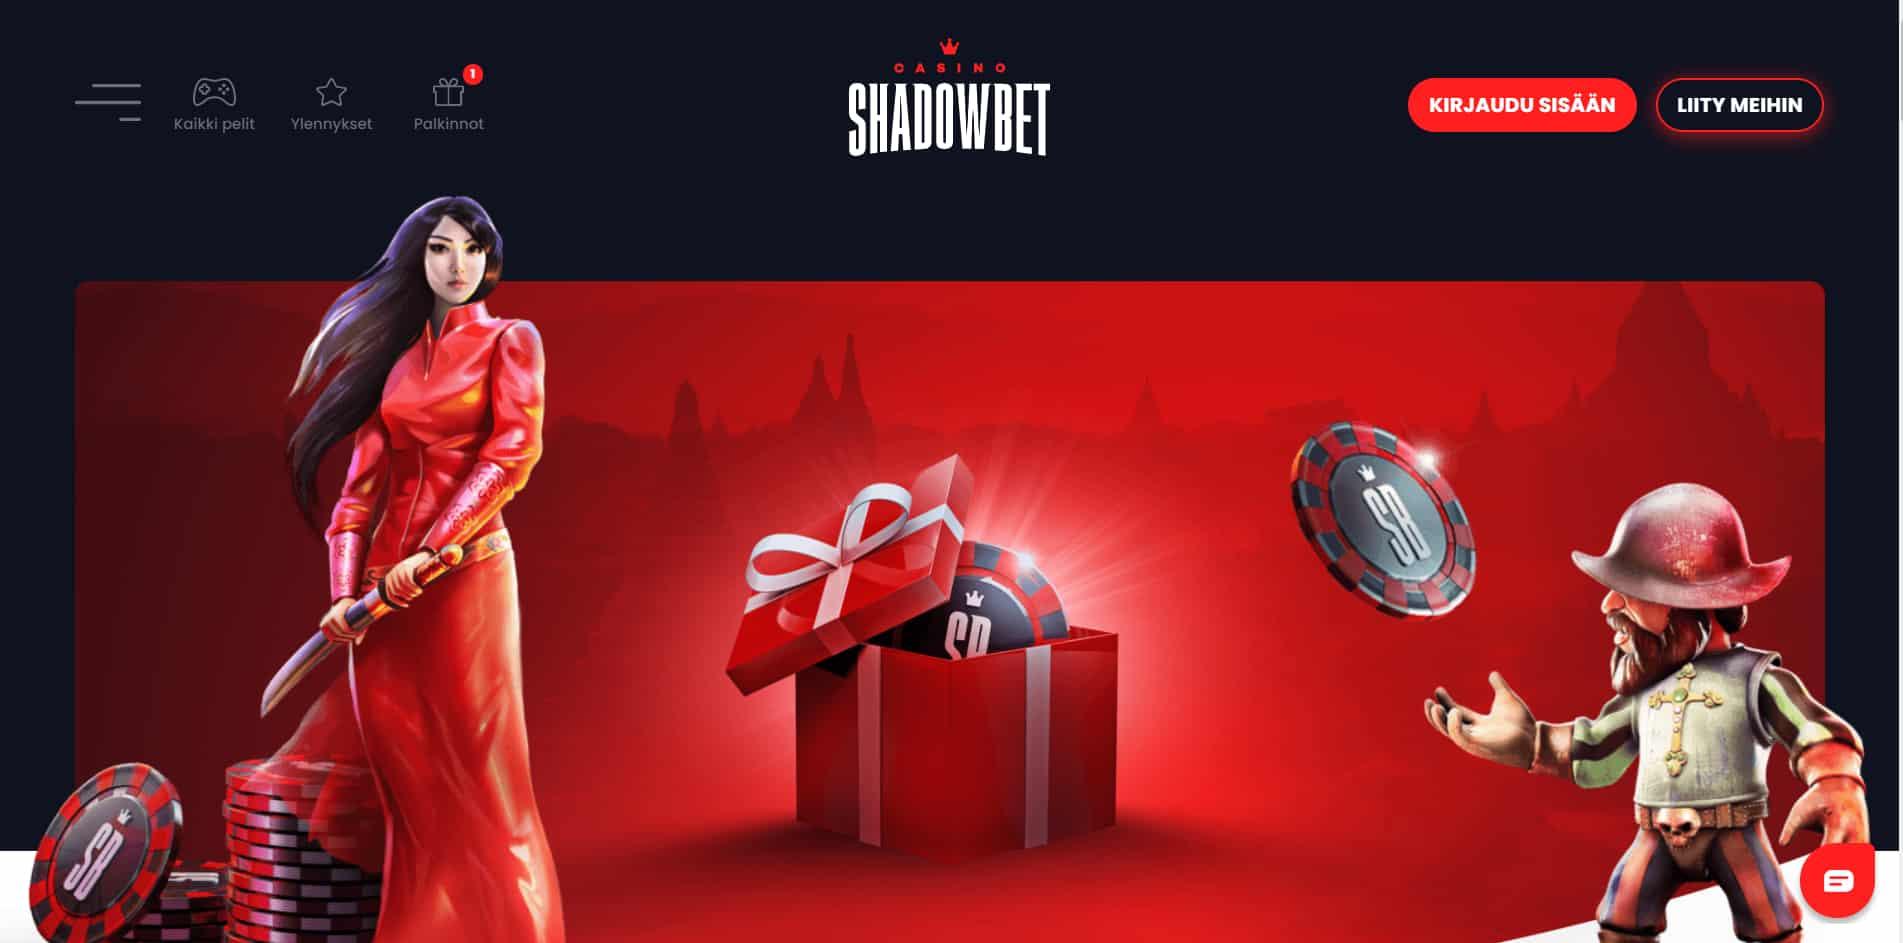 ShadowBet casino homepage